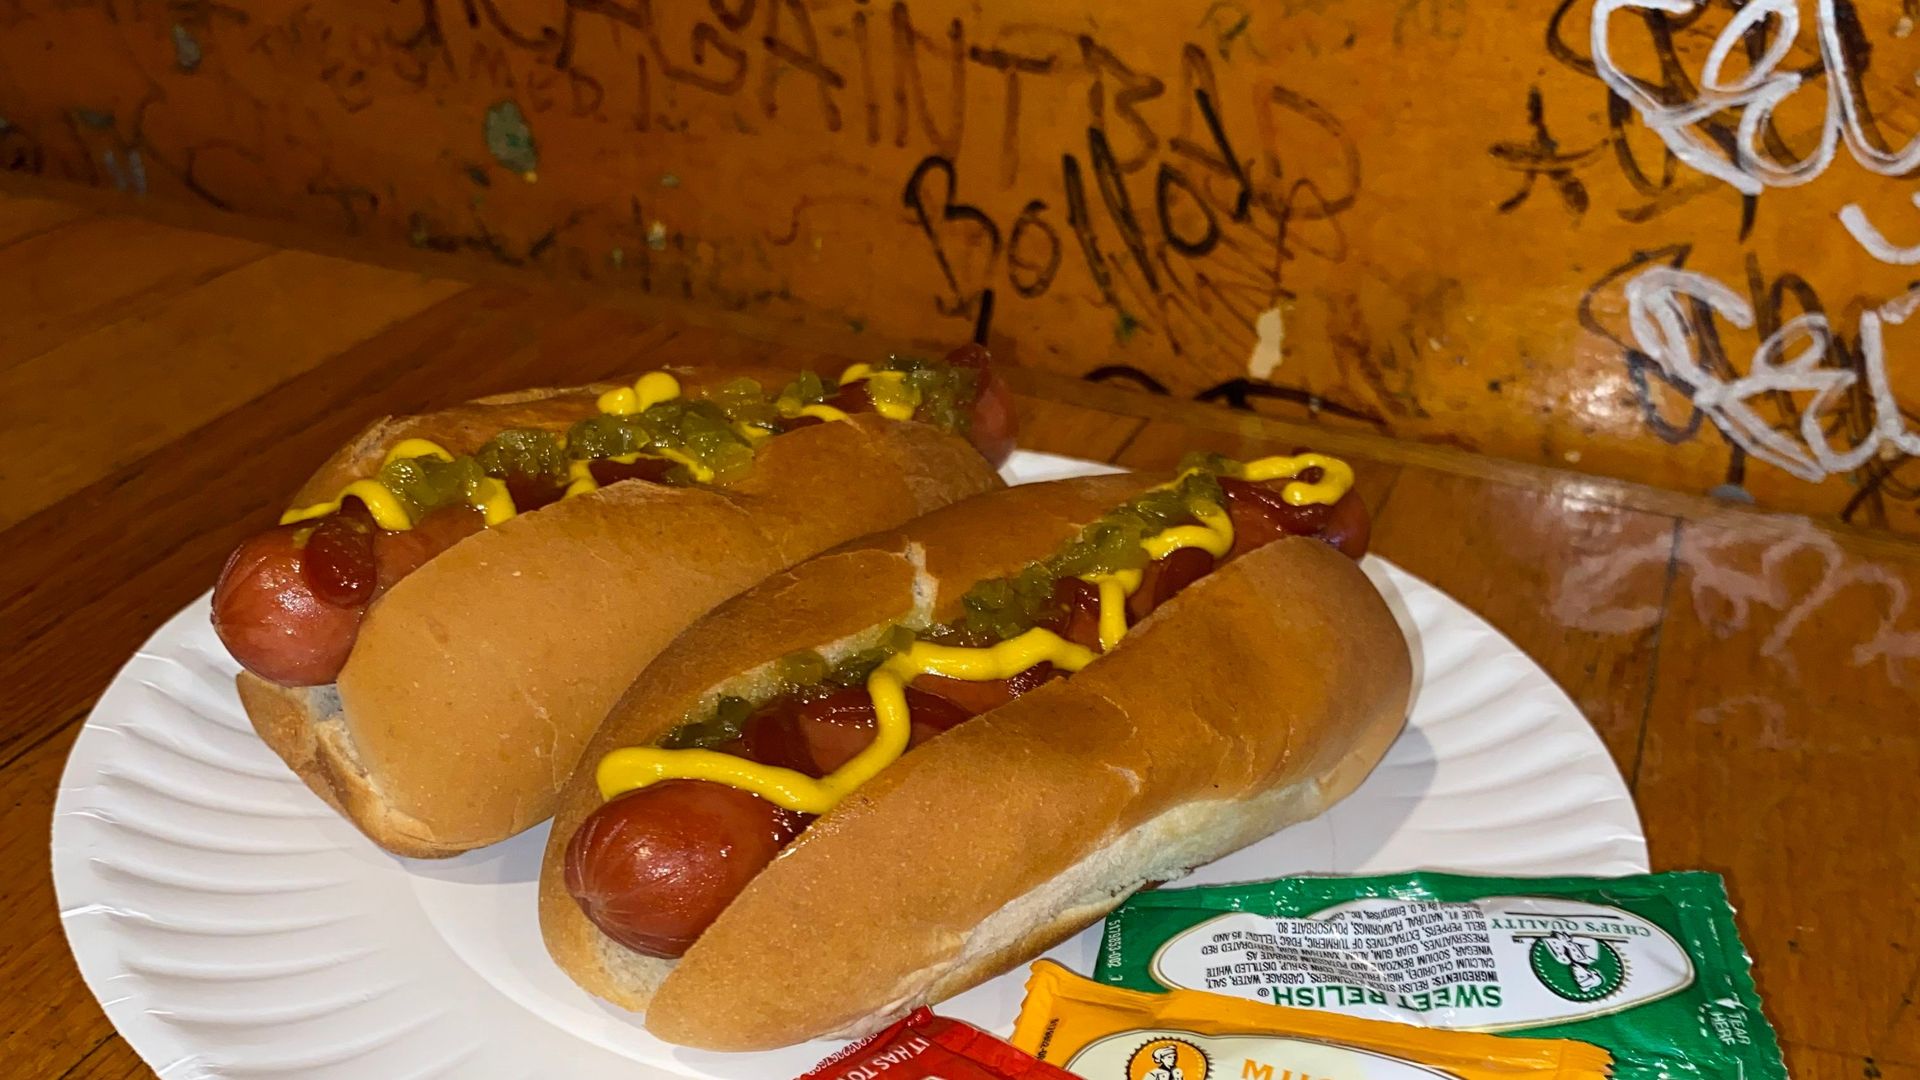 Two hotdogs